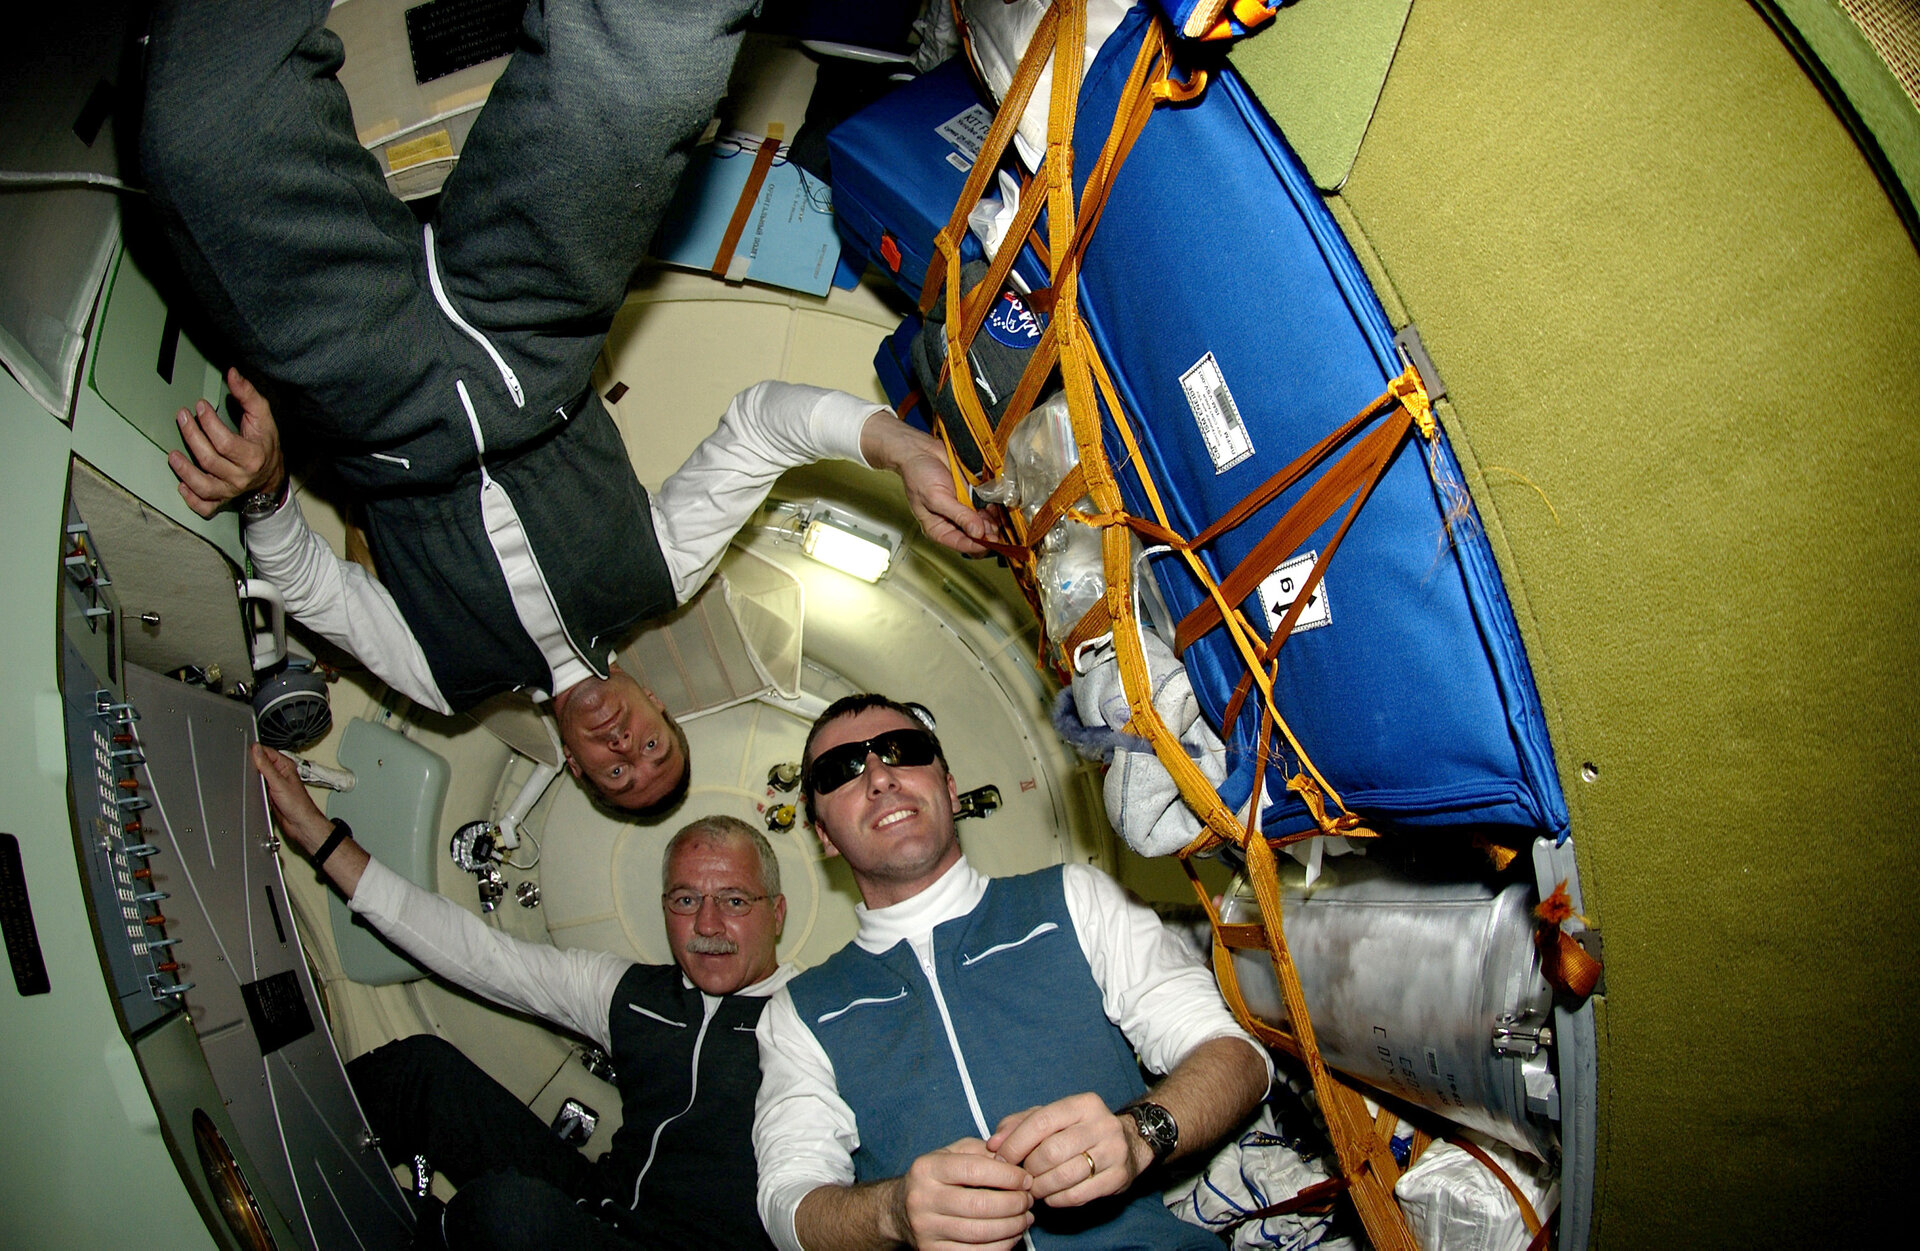 Limited space inside the Soyuz TMA-6 capsule